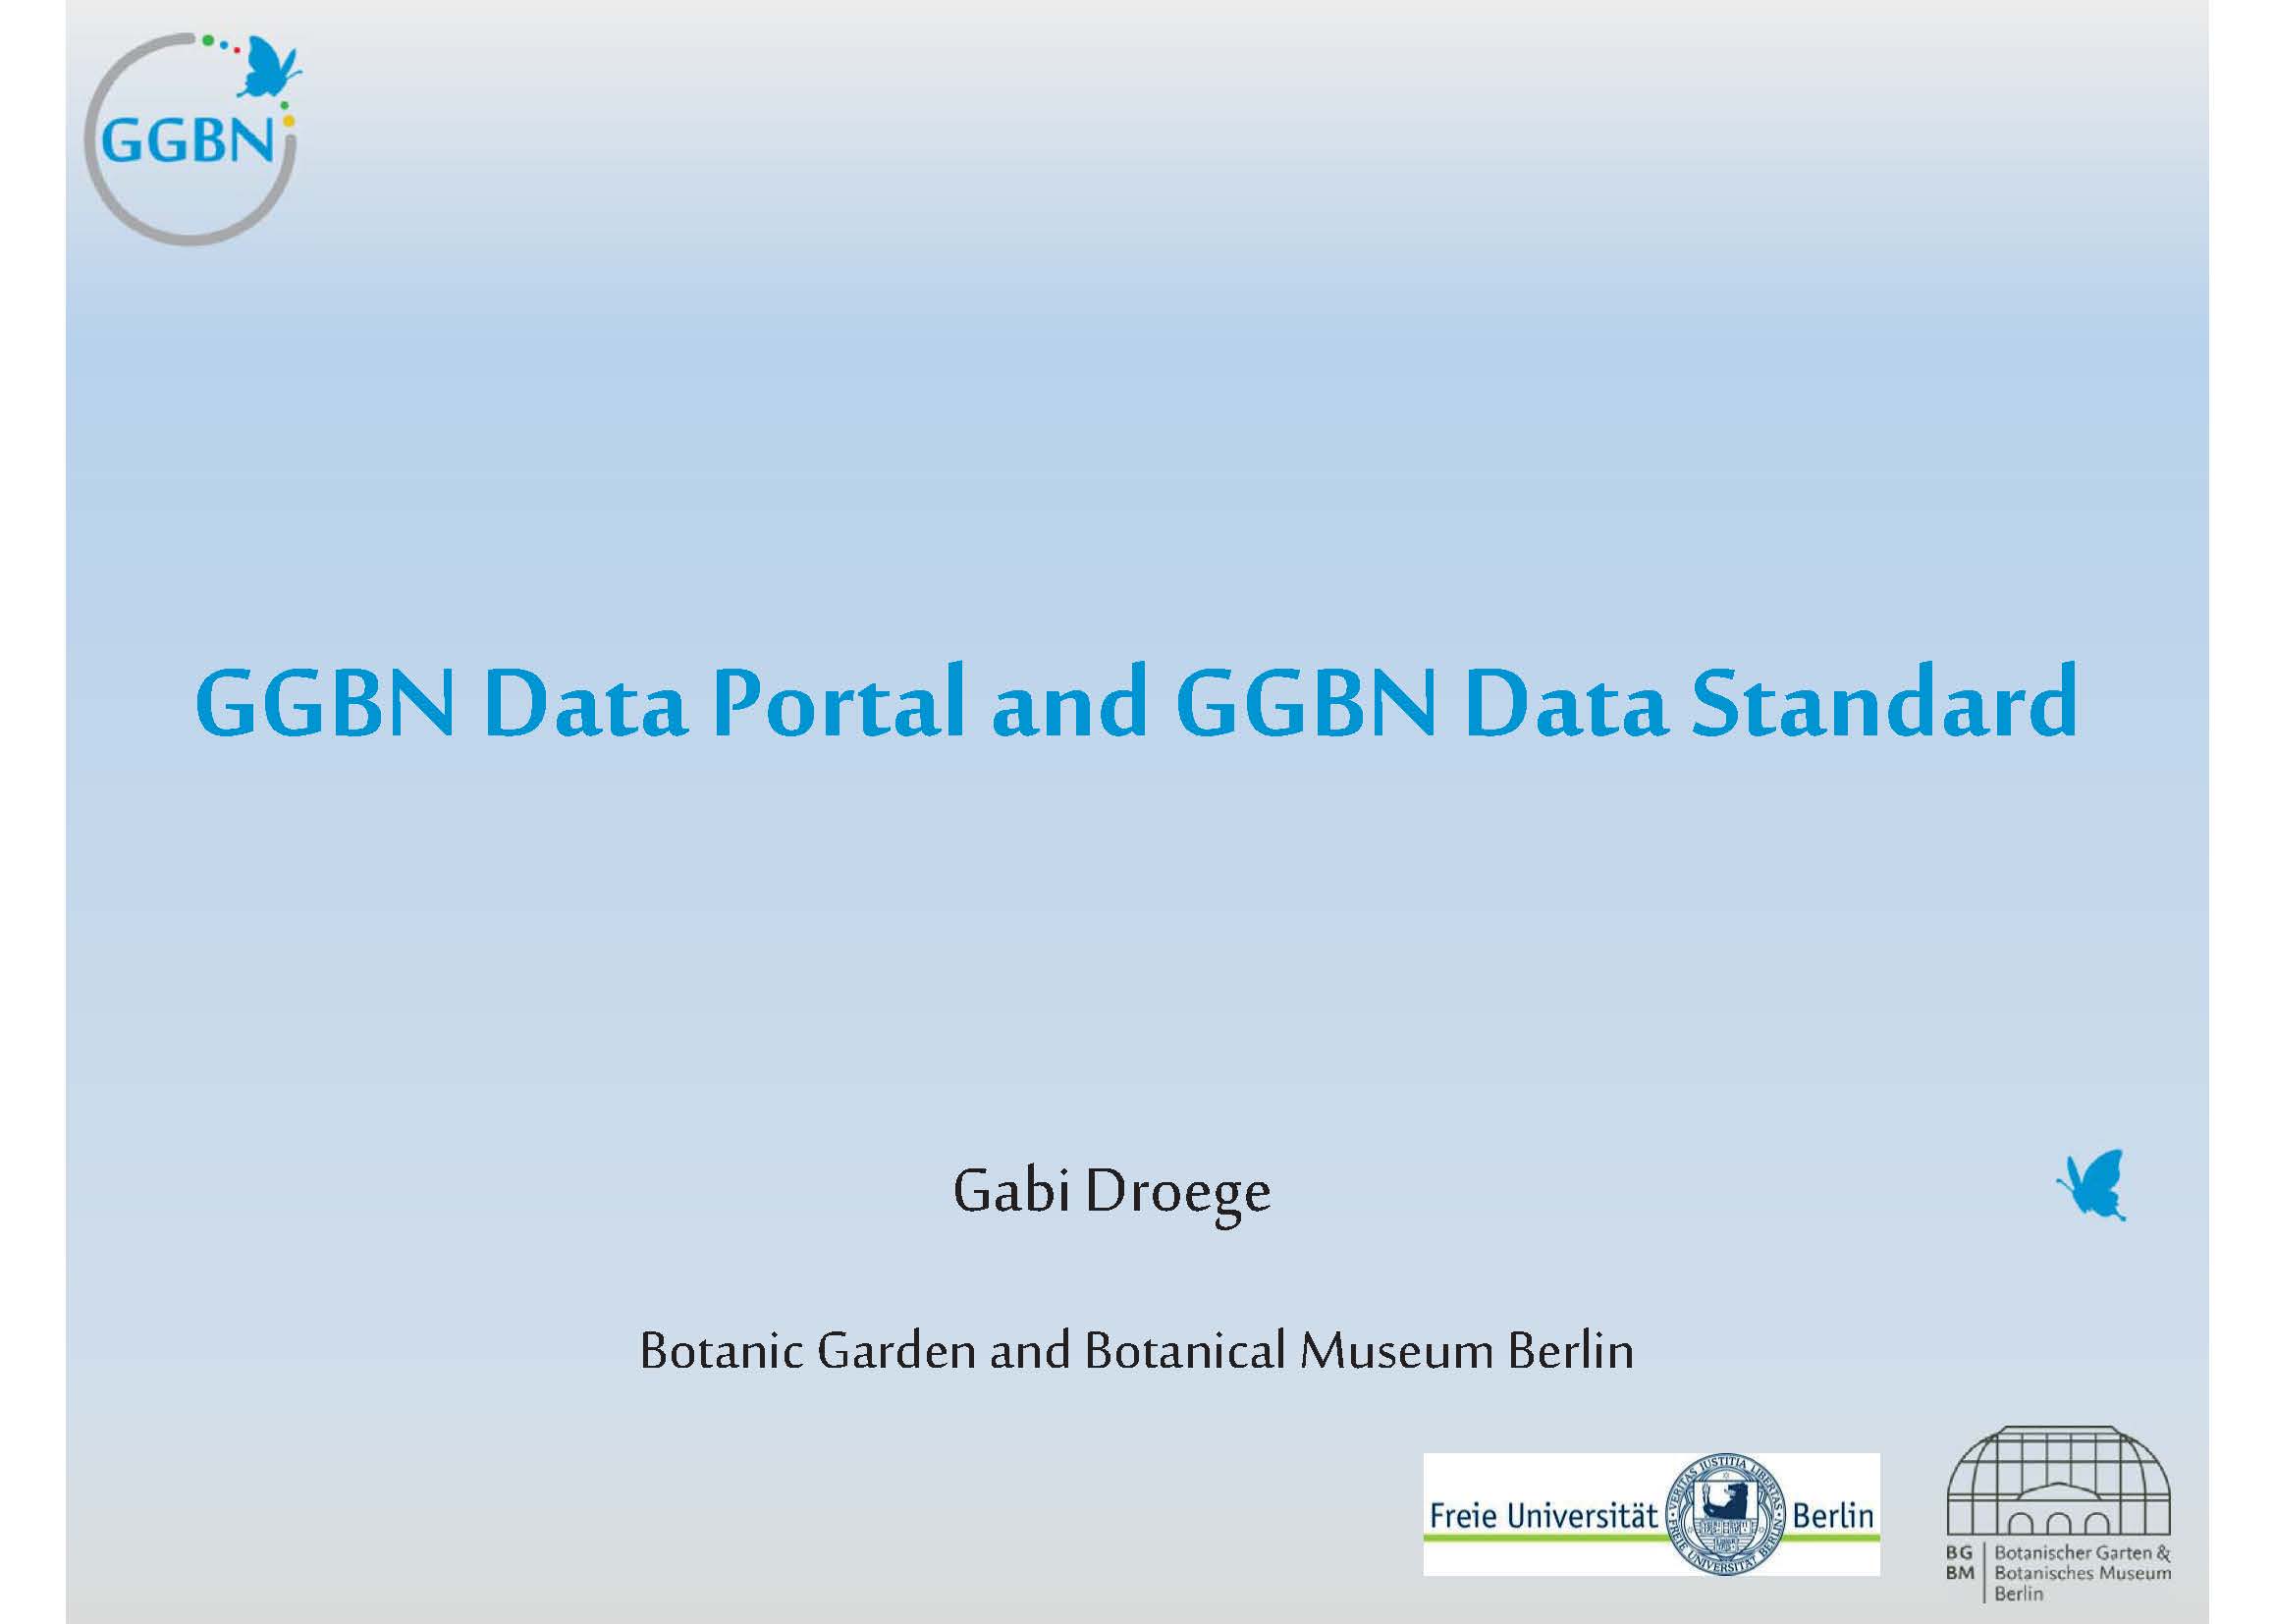 Droege 2017 Introduction GGBN Data Portal Data Standard.jpg